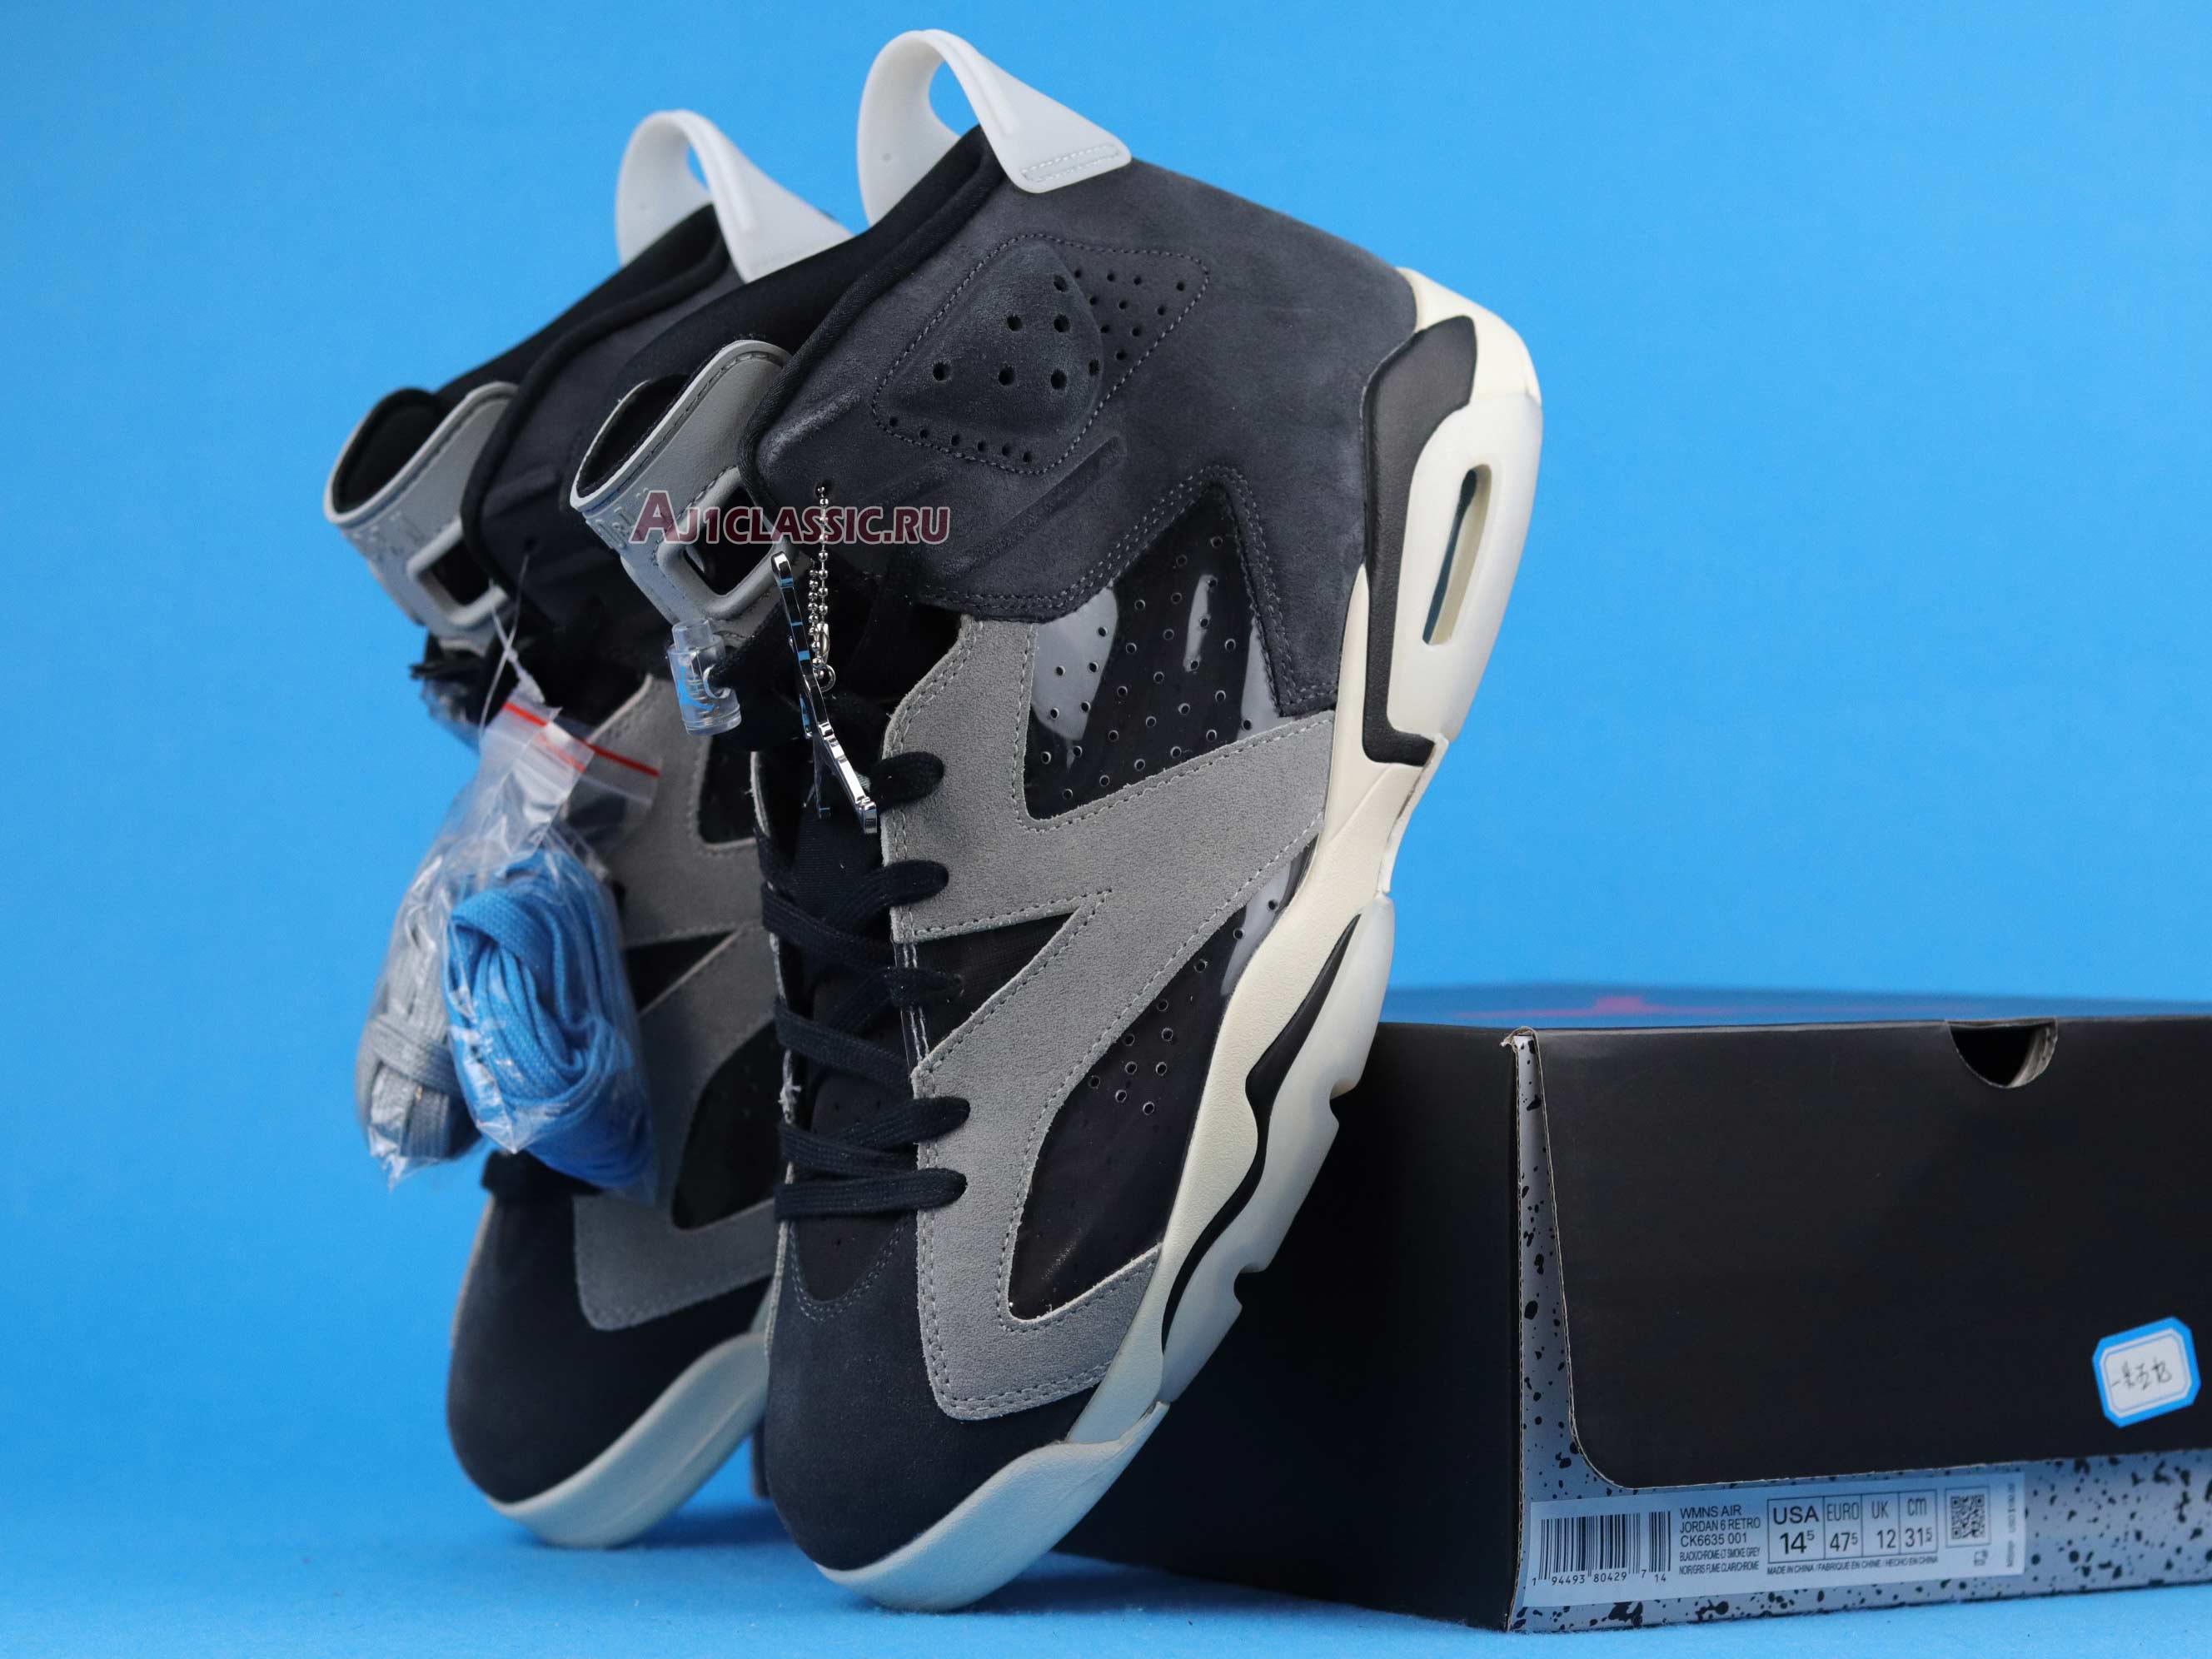 Air Jordan 6 Retro Tech Chrome CK6635-001 Black/Light Smoke Grey/Sail/Chrome Sneakers